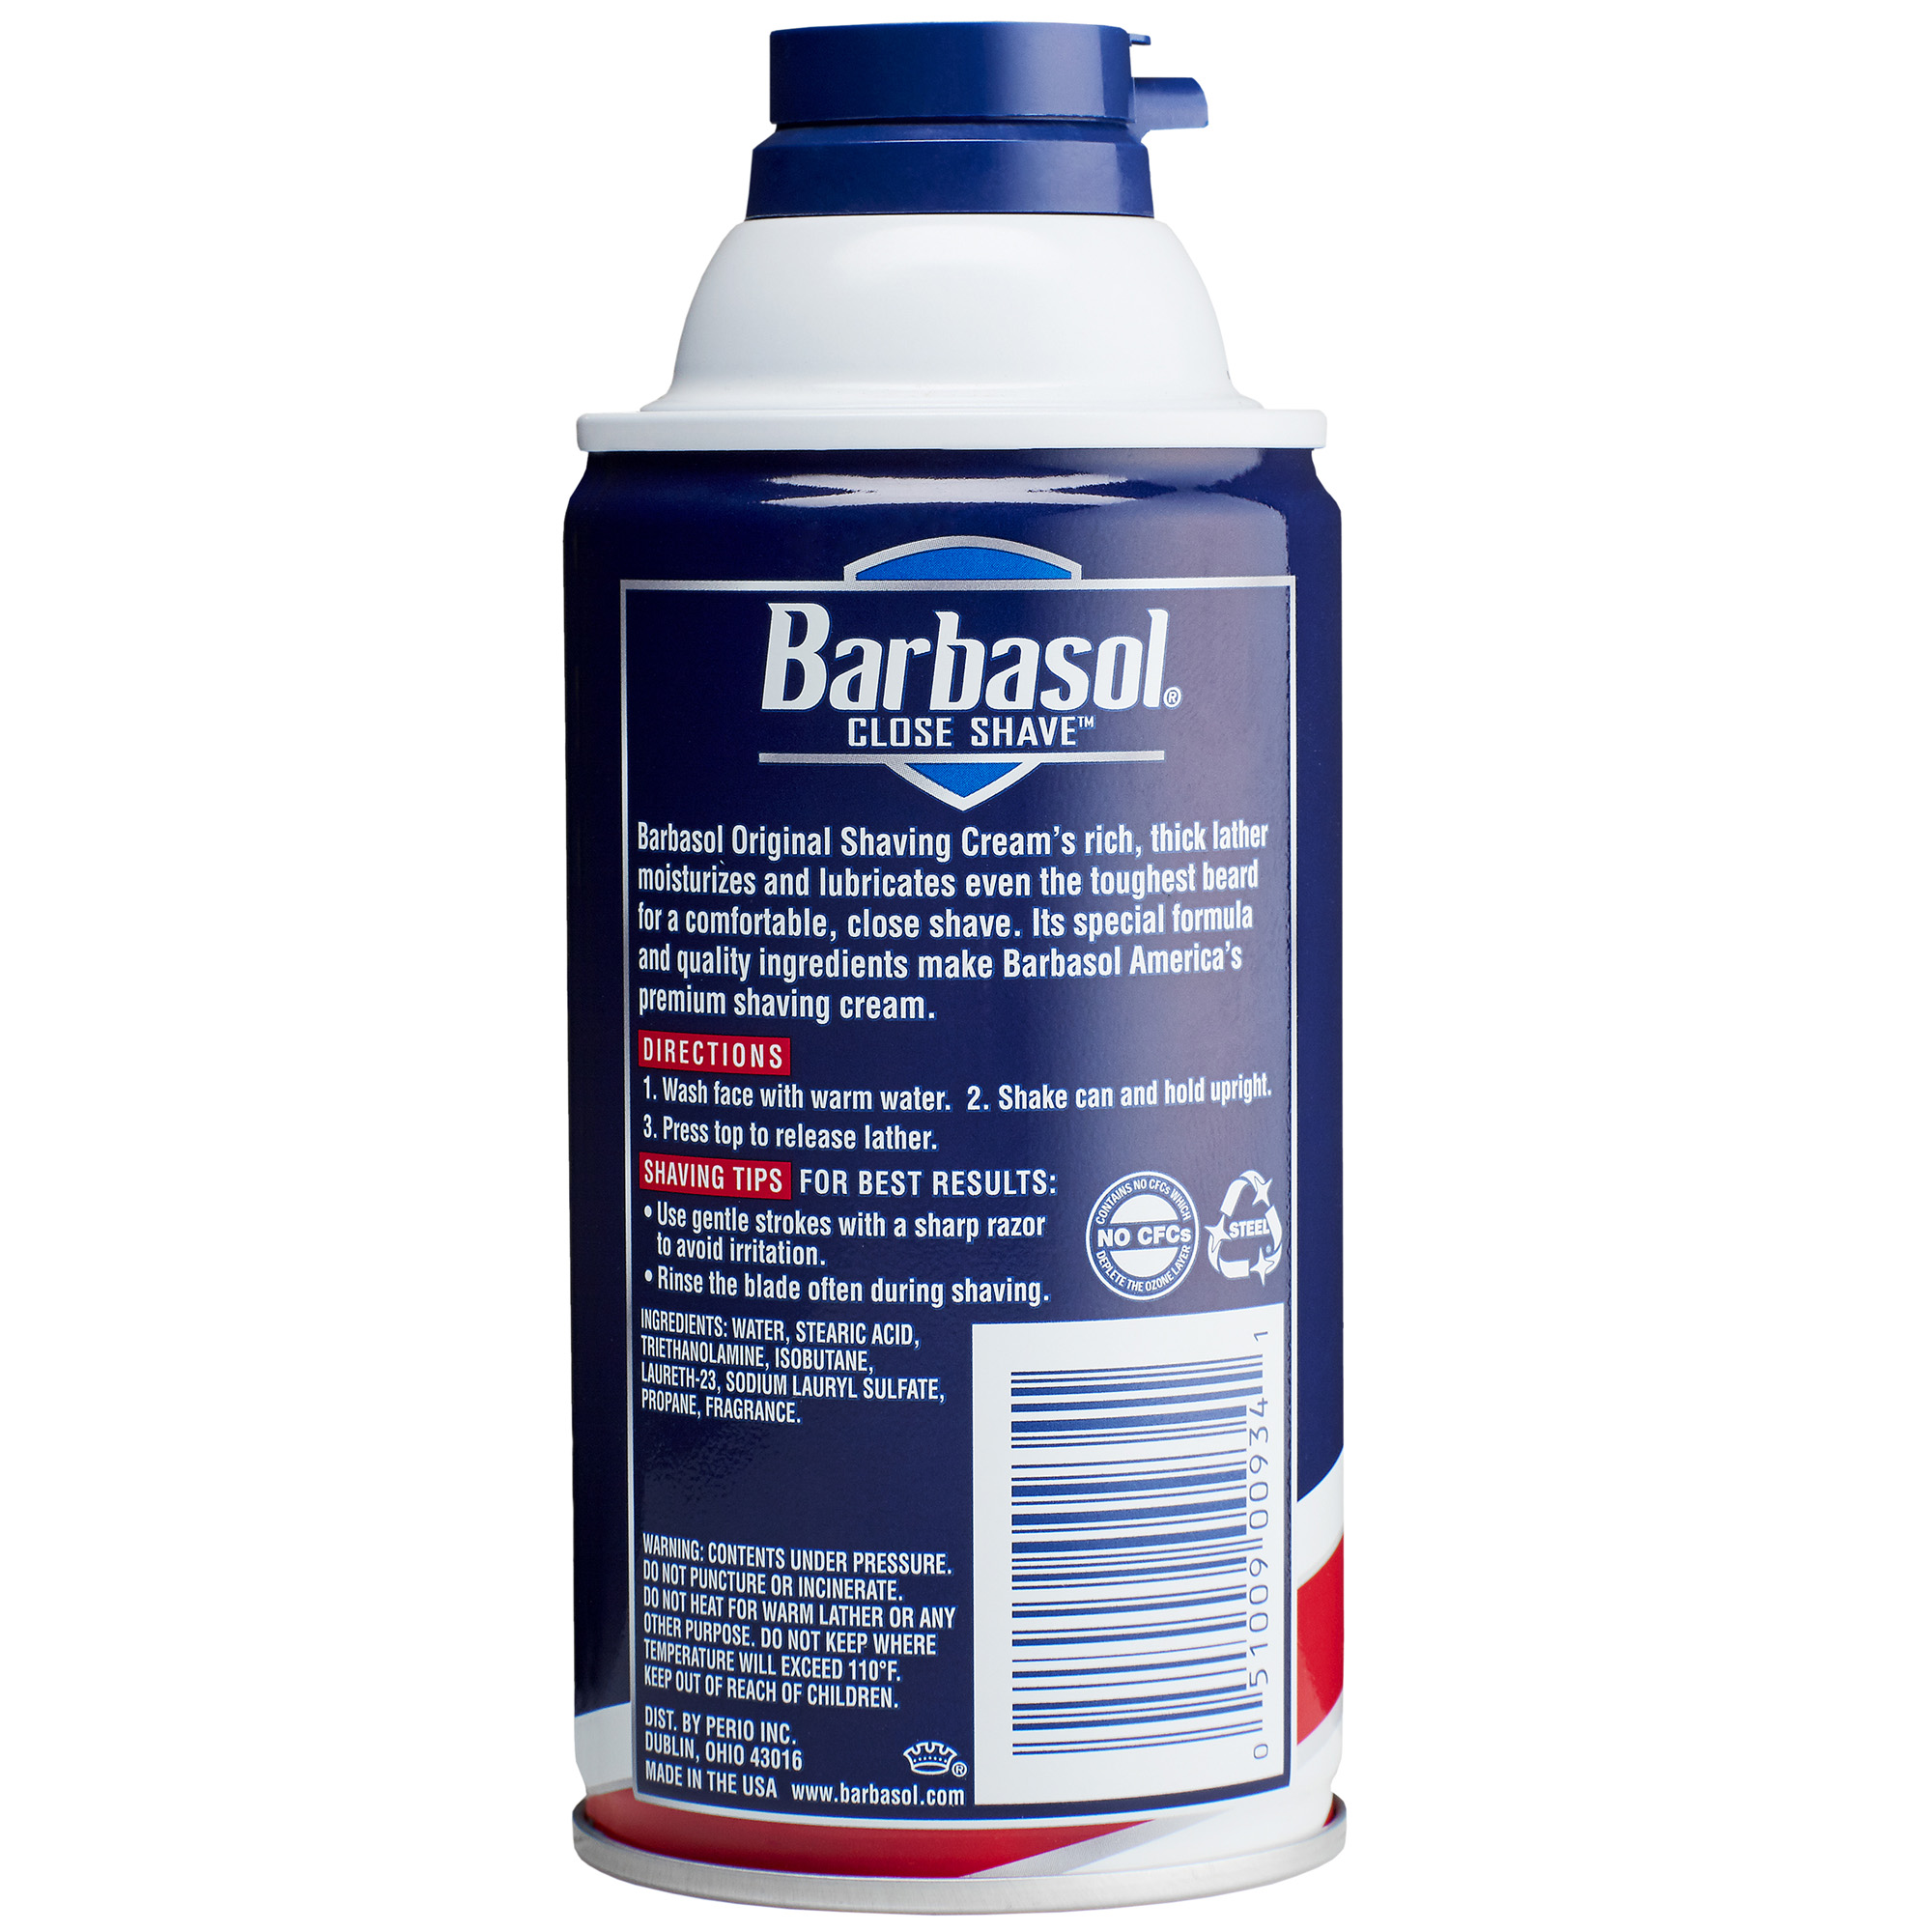 Barbasol Original Thick & Rich Shaving Cream for Men, 10 Oz. - image 2 of 5